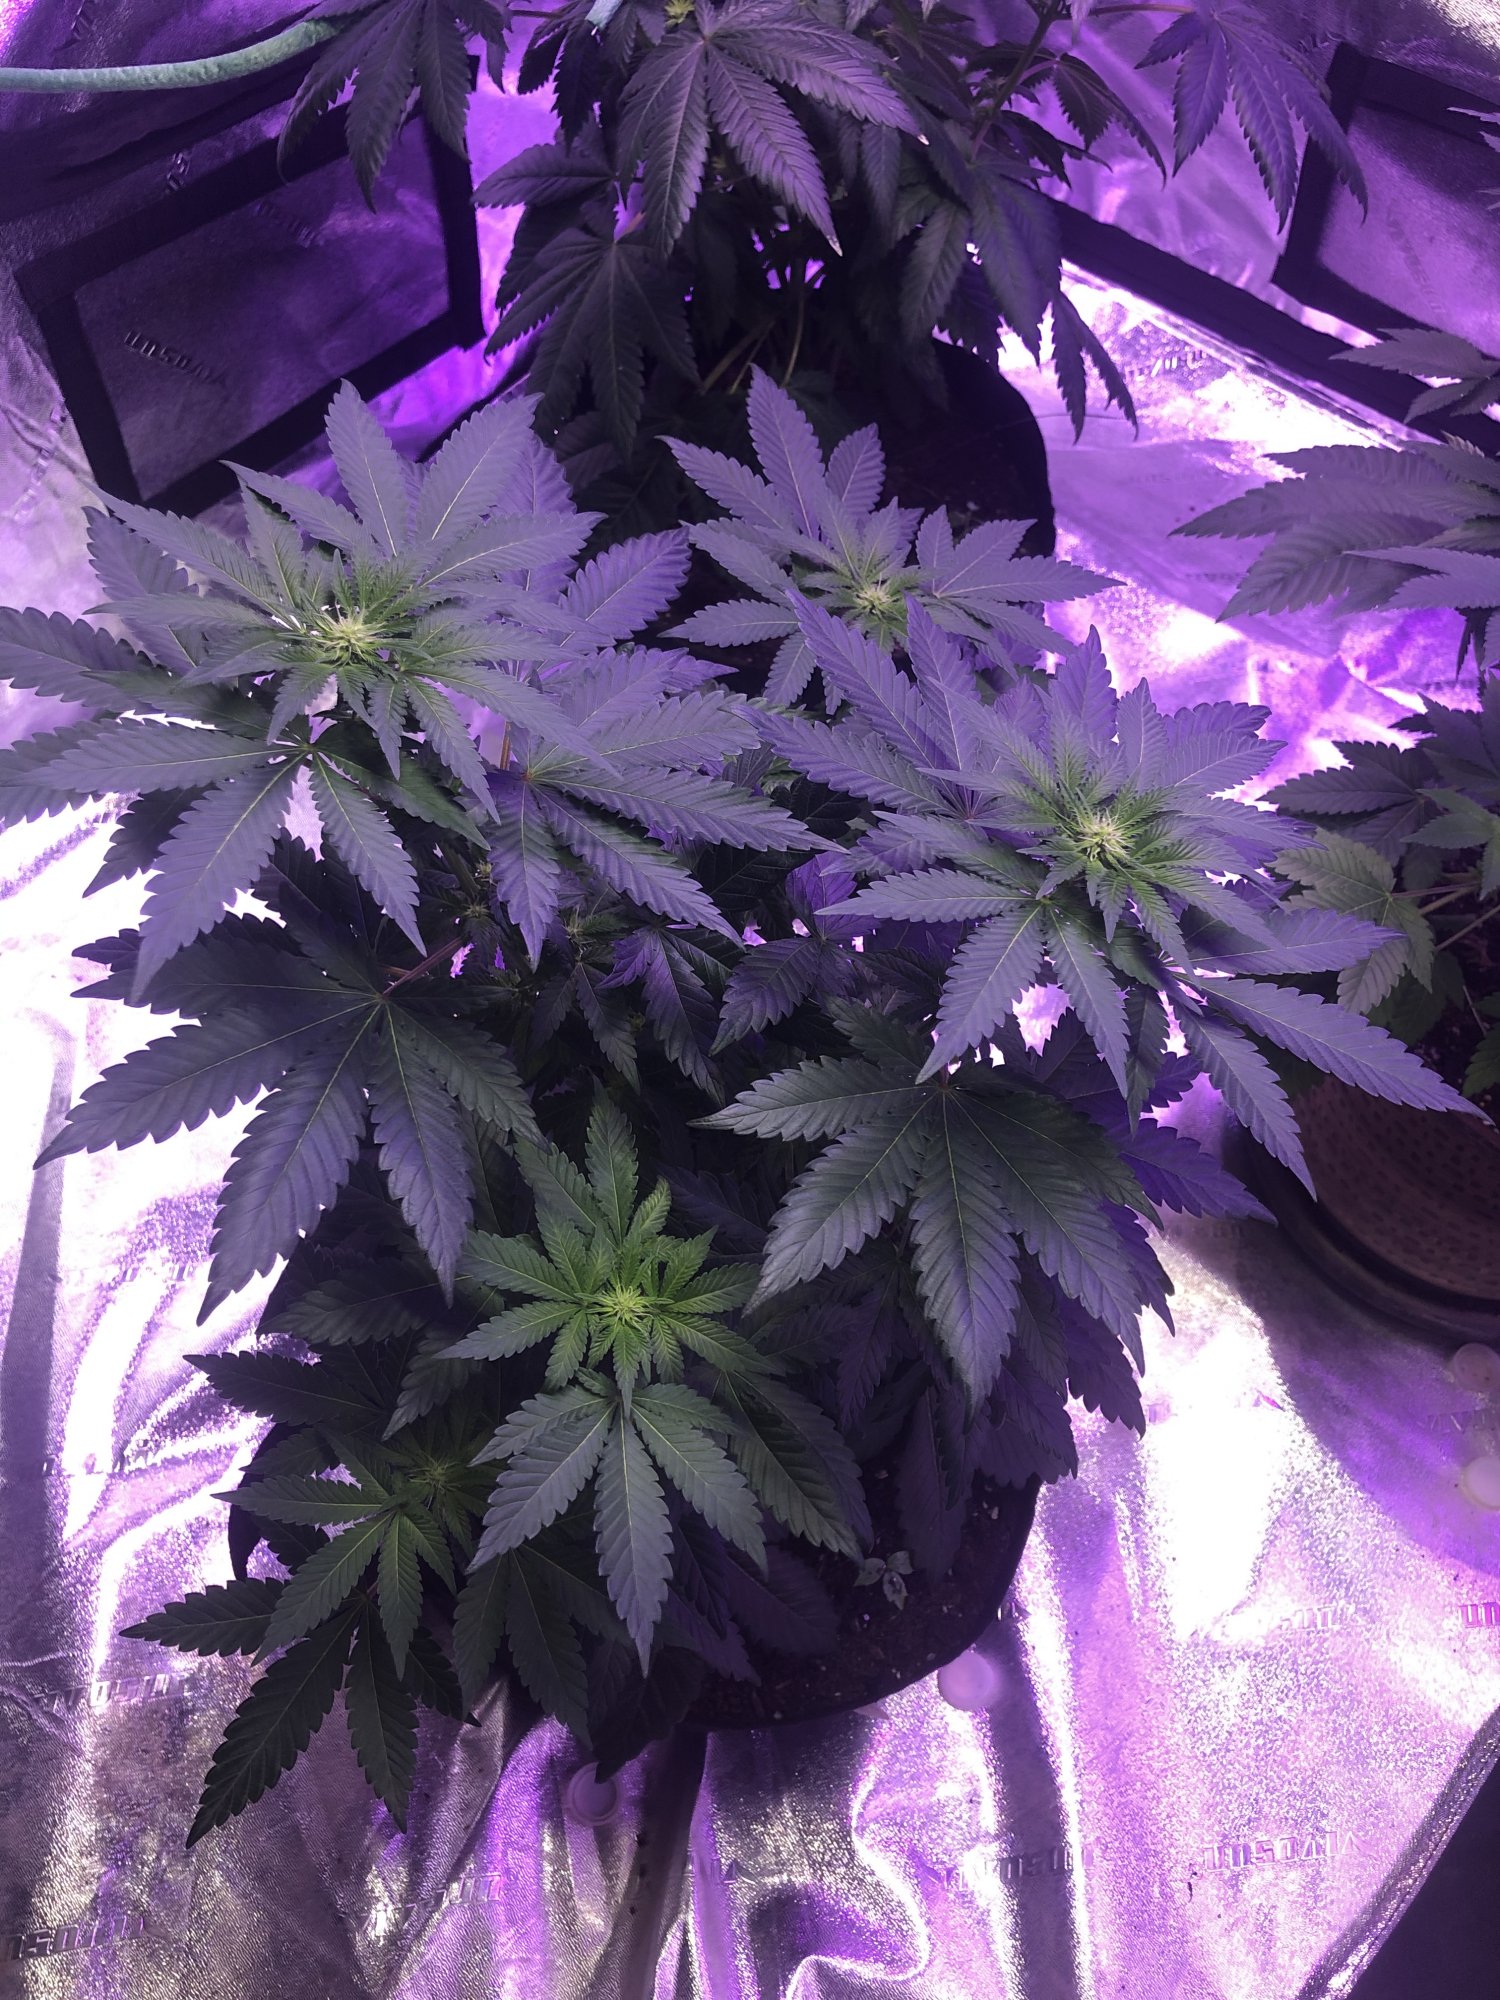 Week three of flower white widow strain 2